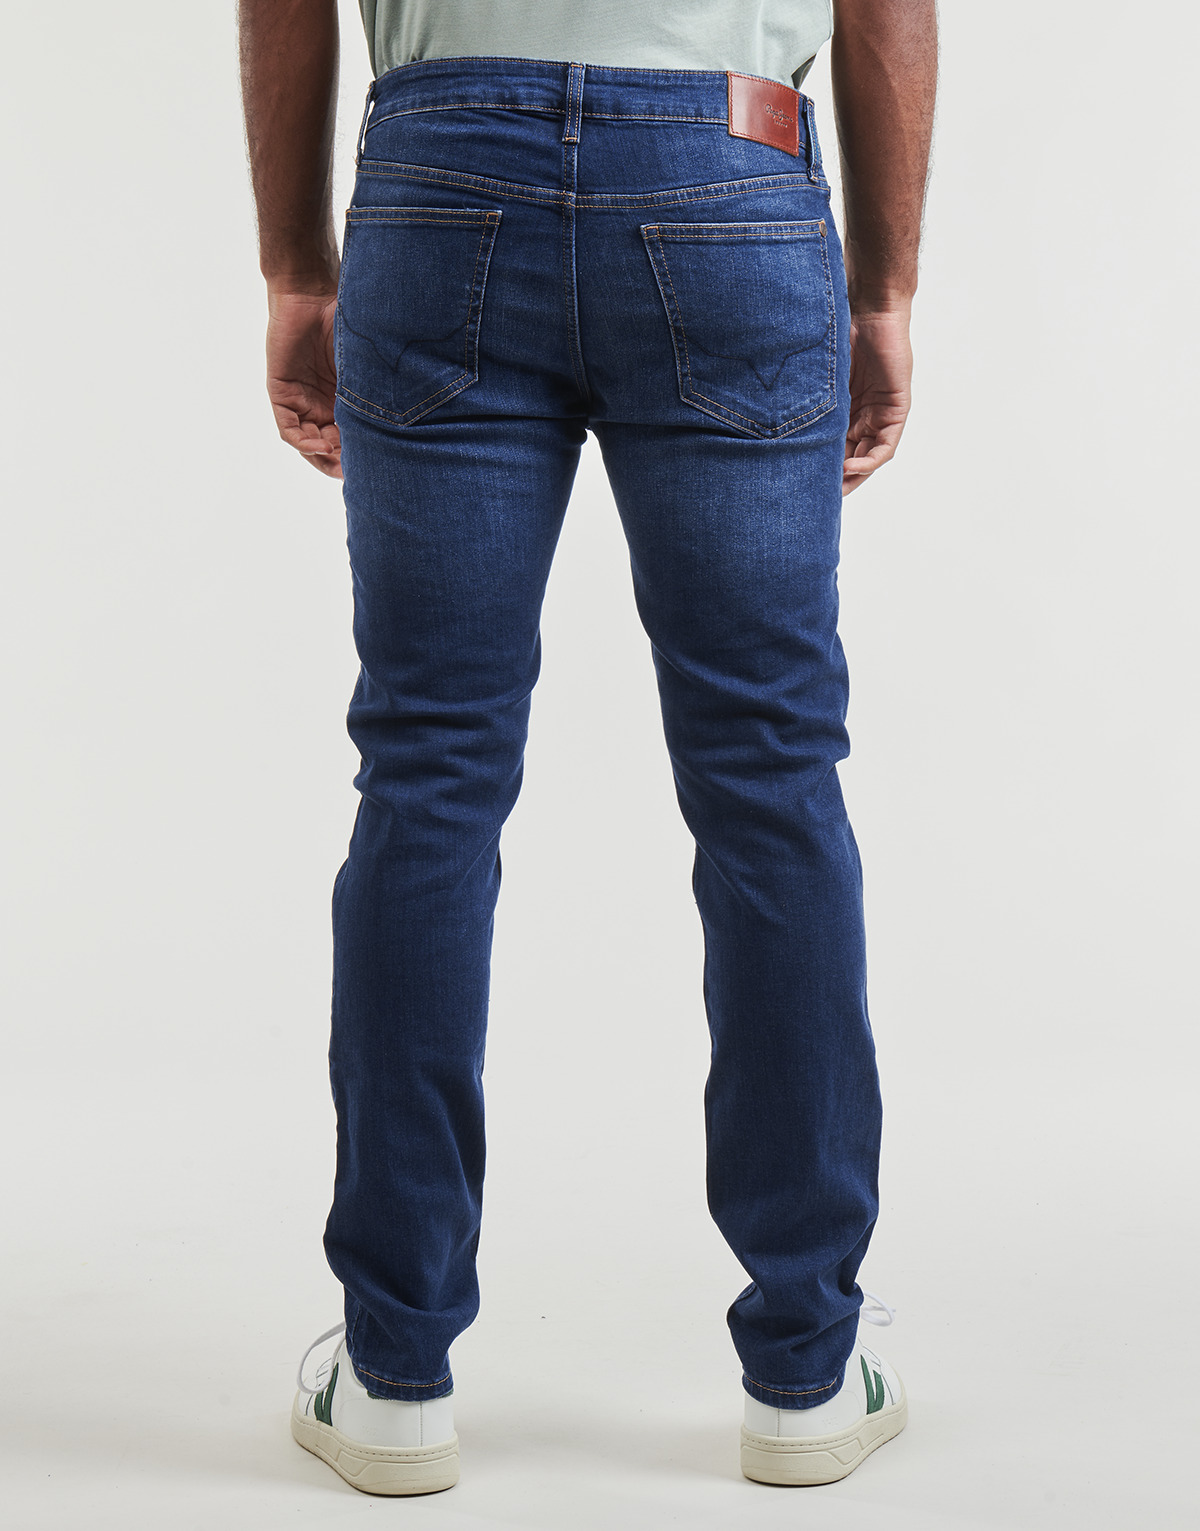 Pepe jeans Jean SLIM JEANS S1WEm95x